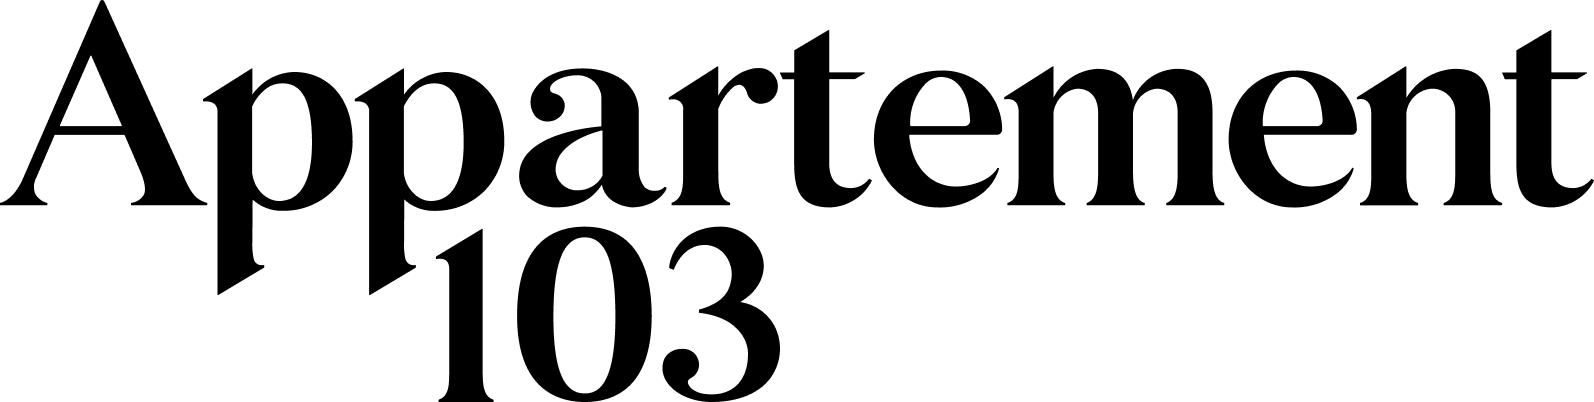 a103-logo